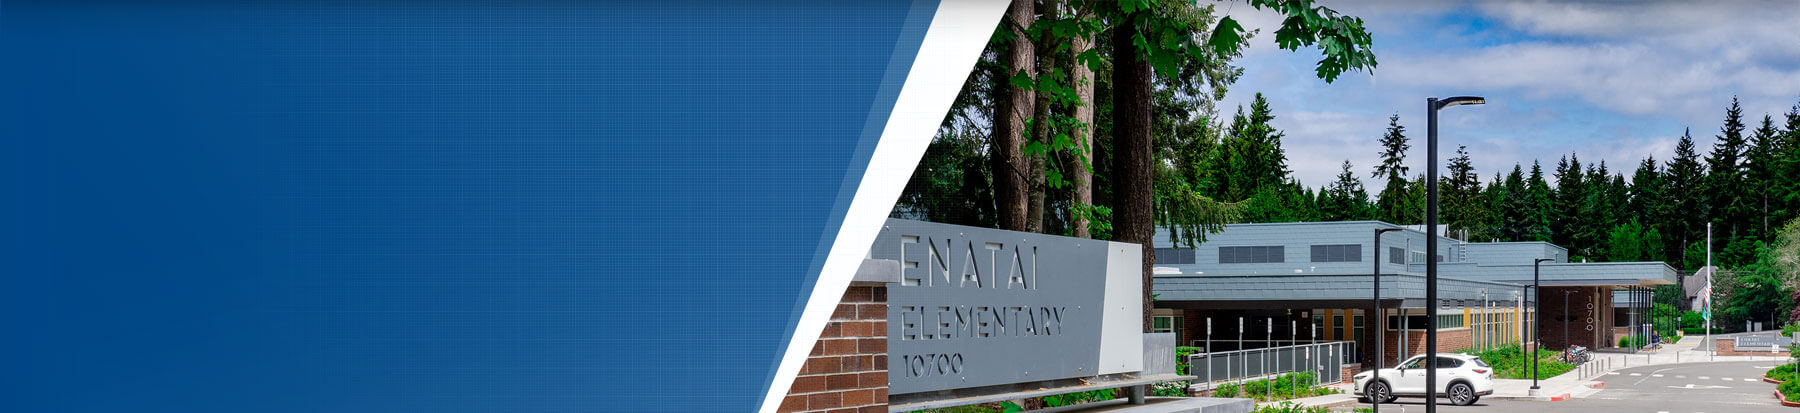 Enatai Elementary Blue Ridge Technologies Lighting Project